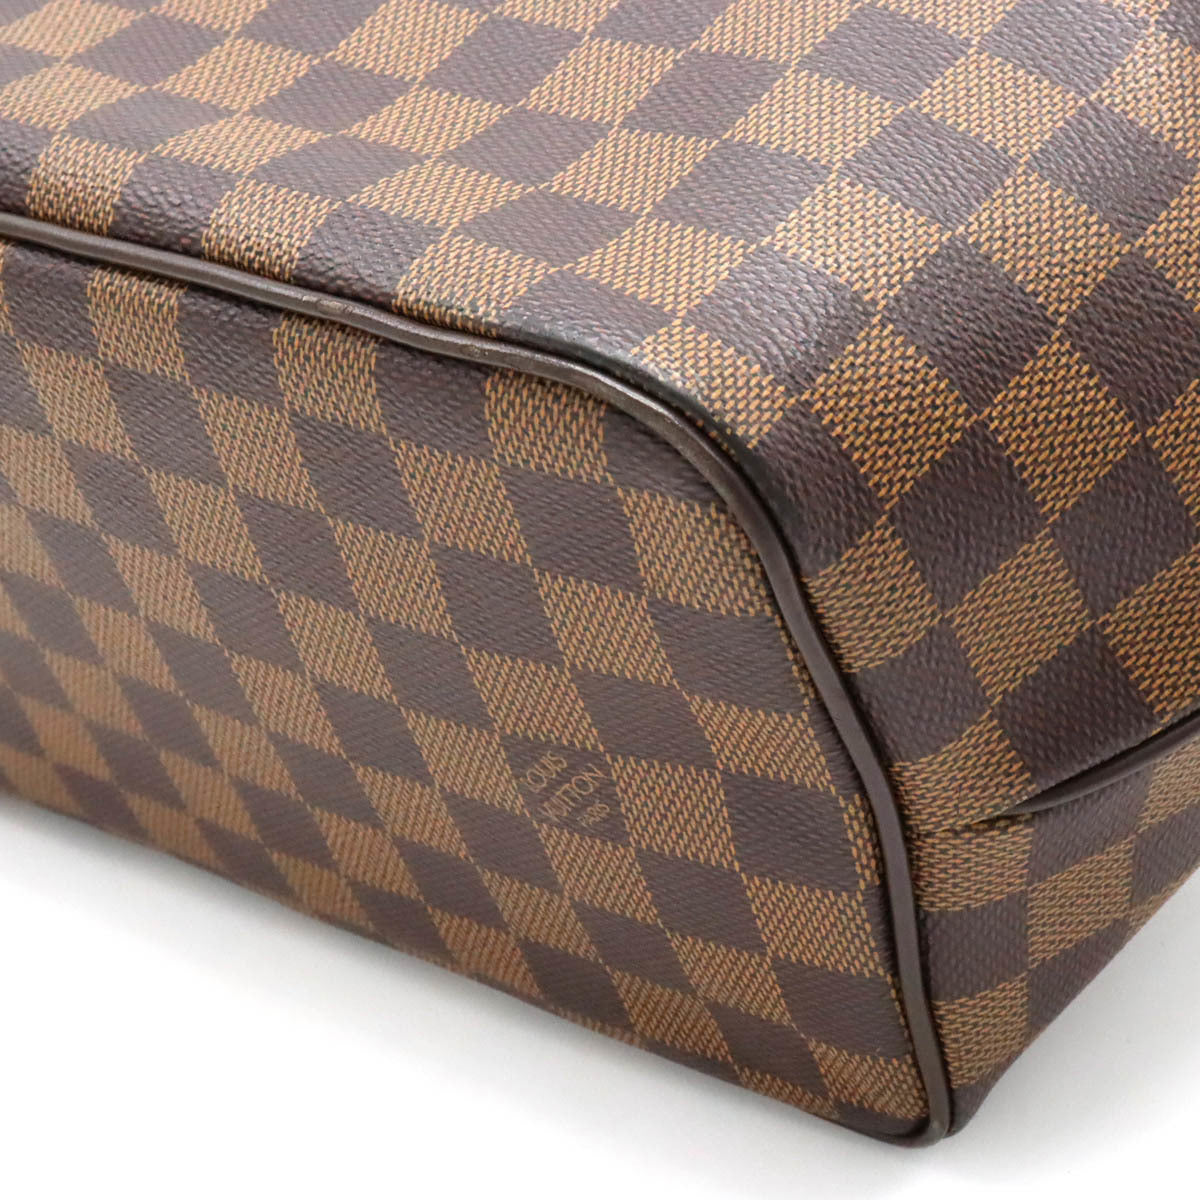 Authentic Louis Vuitton Westminster Damier PM Handbag - Pre-owned